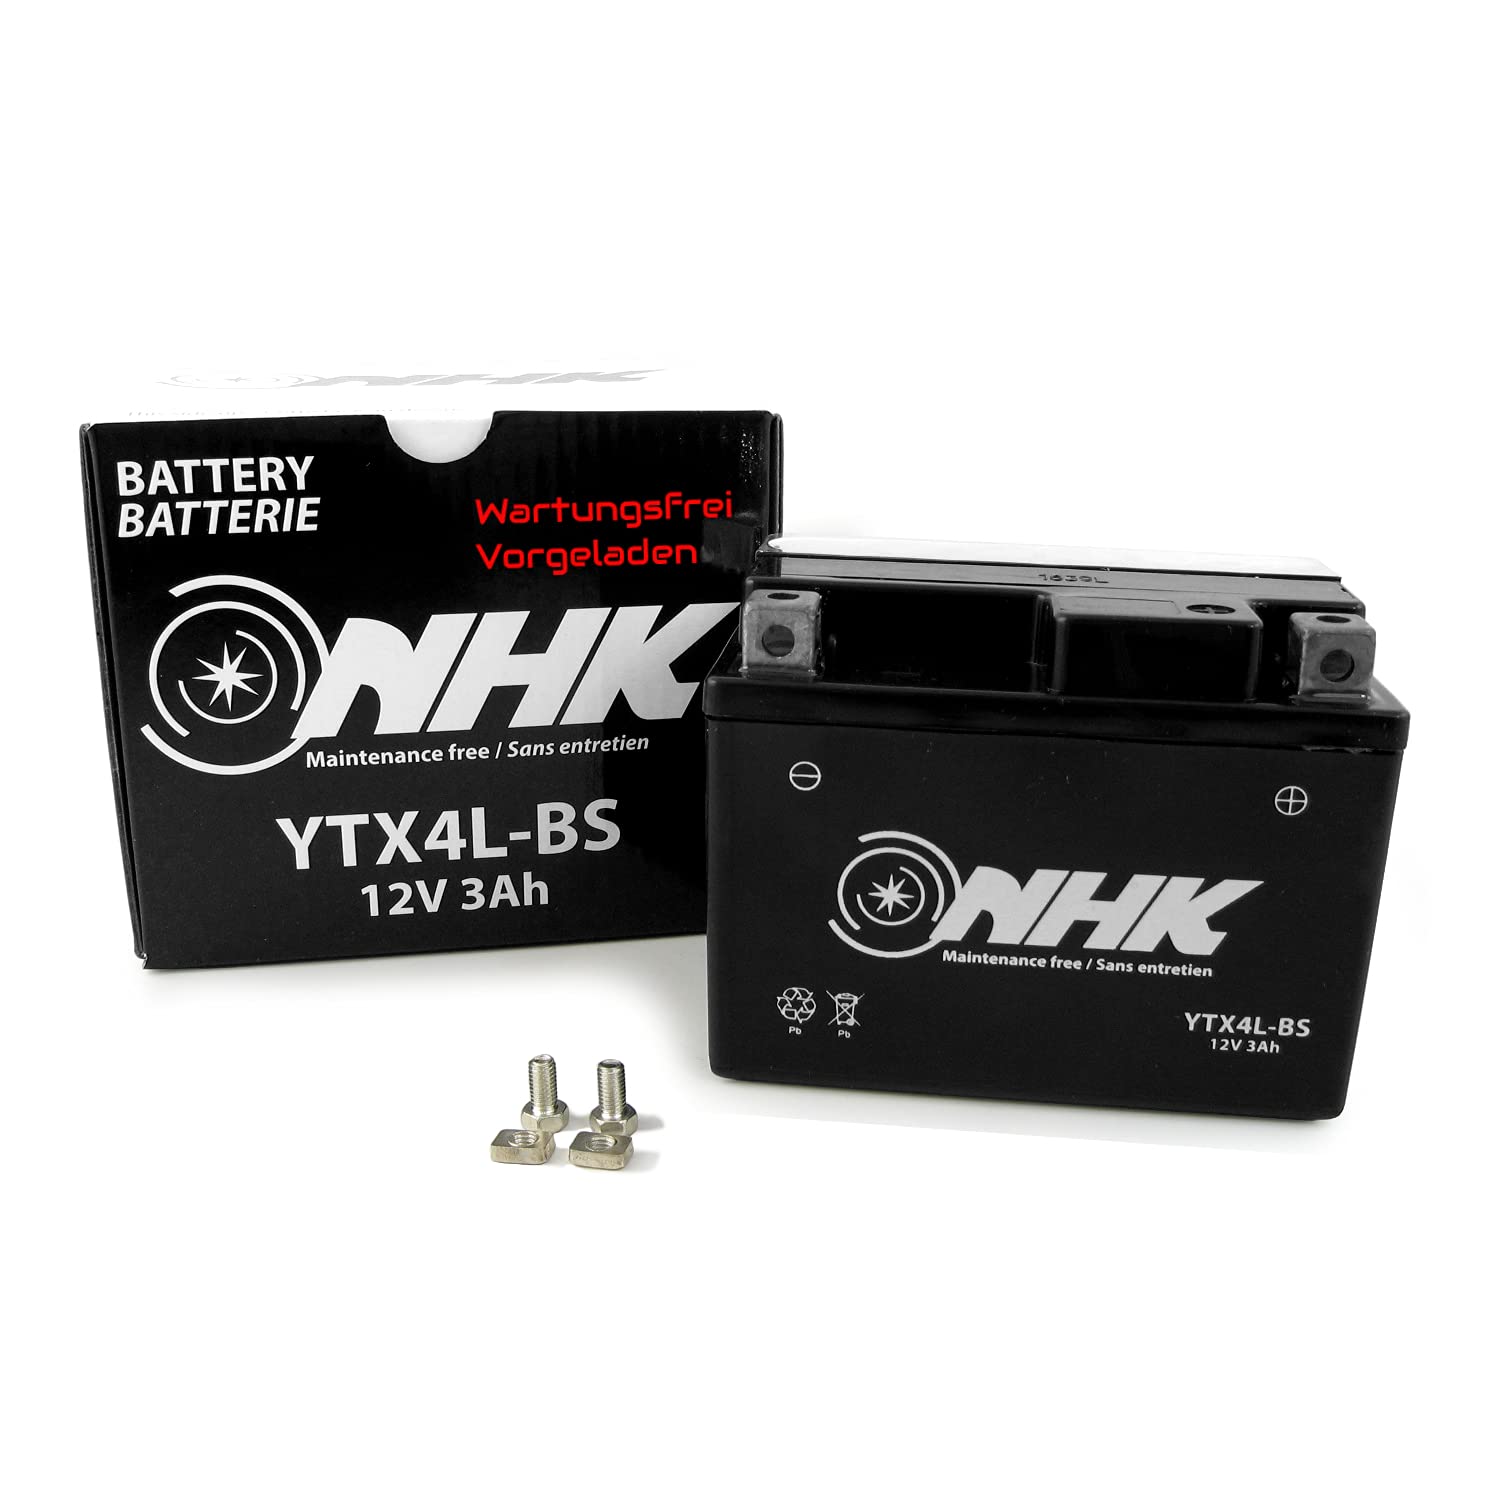 Wartungsfreie Batterie 3Ah kompatibel mit Piaggio Sfera NSL 50 TT AC 91-94 NSL1T (YTX4L-BS) von Area Longboard